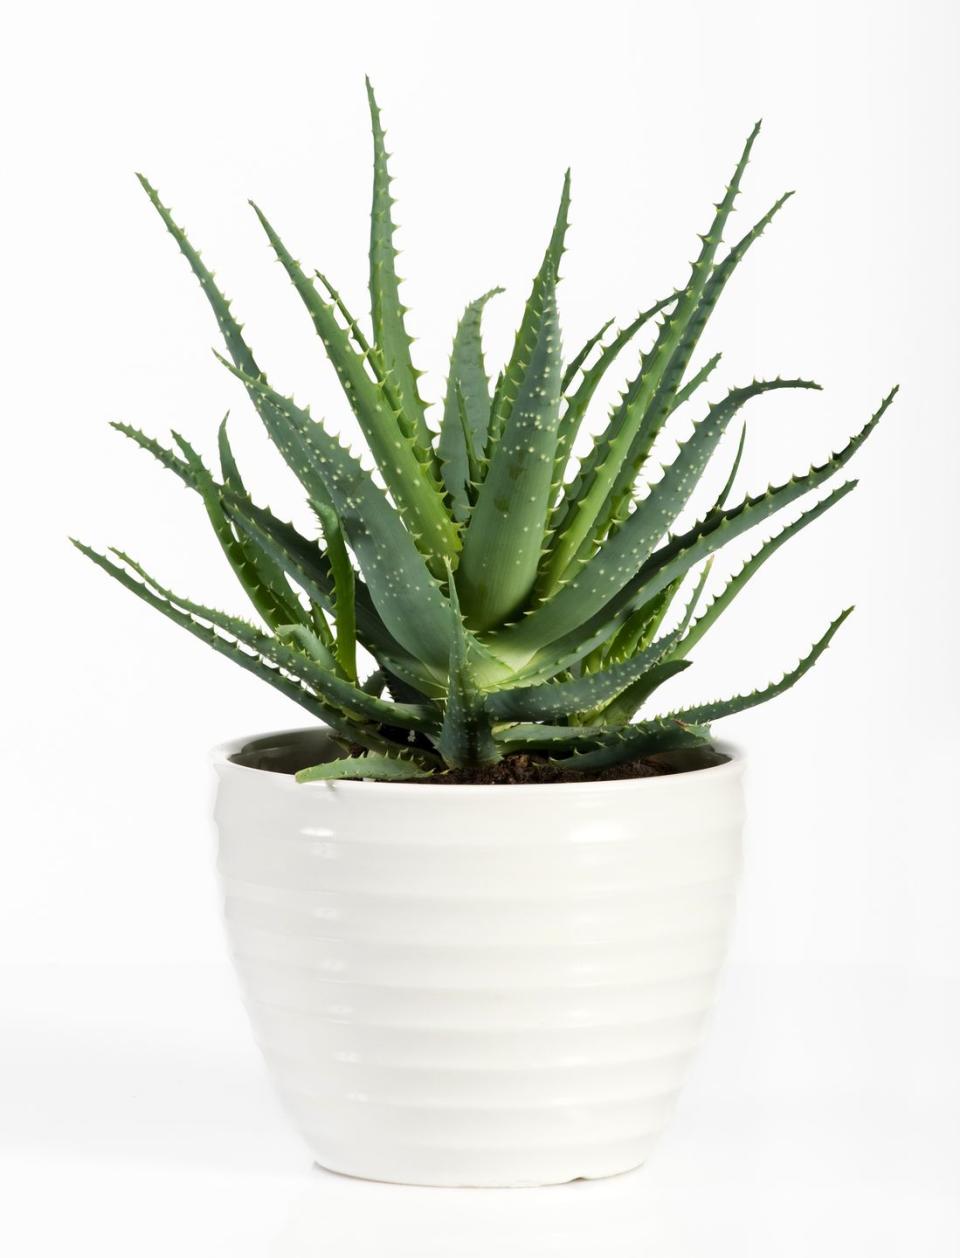 18) Aloe Vera Plant